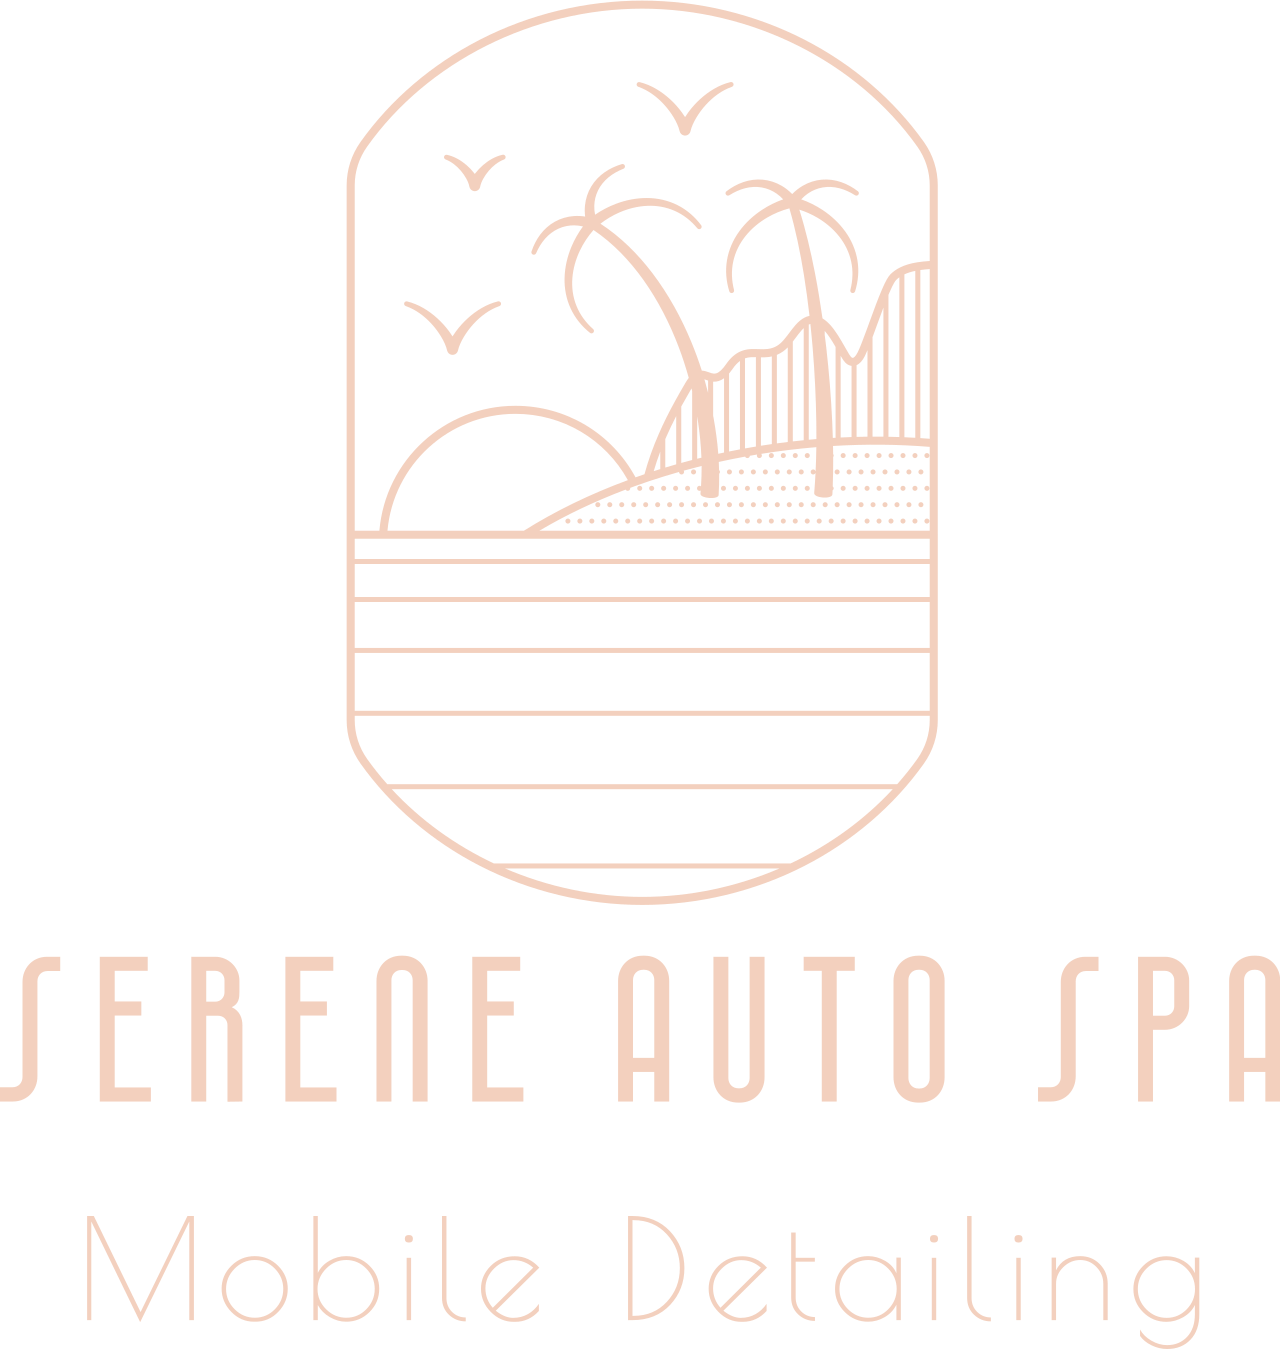 Serene Auto Spa Pricing Menu's logo